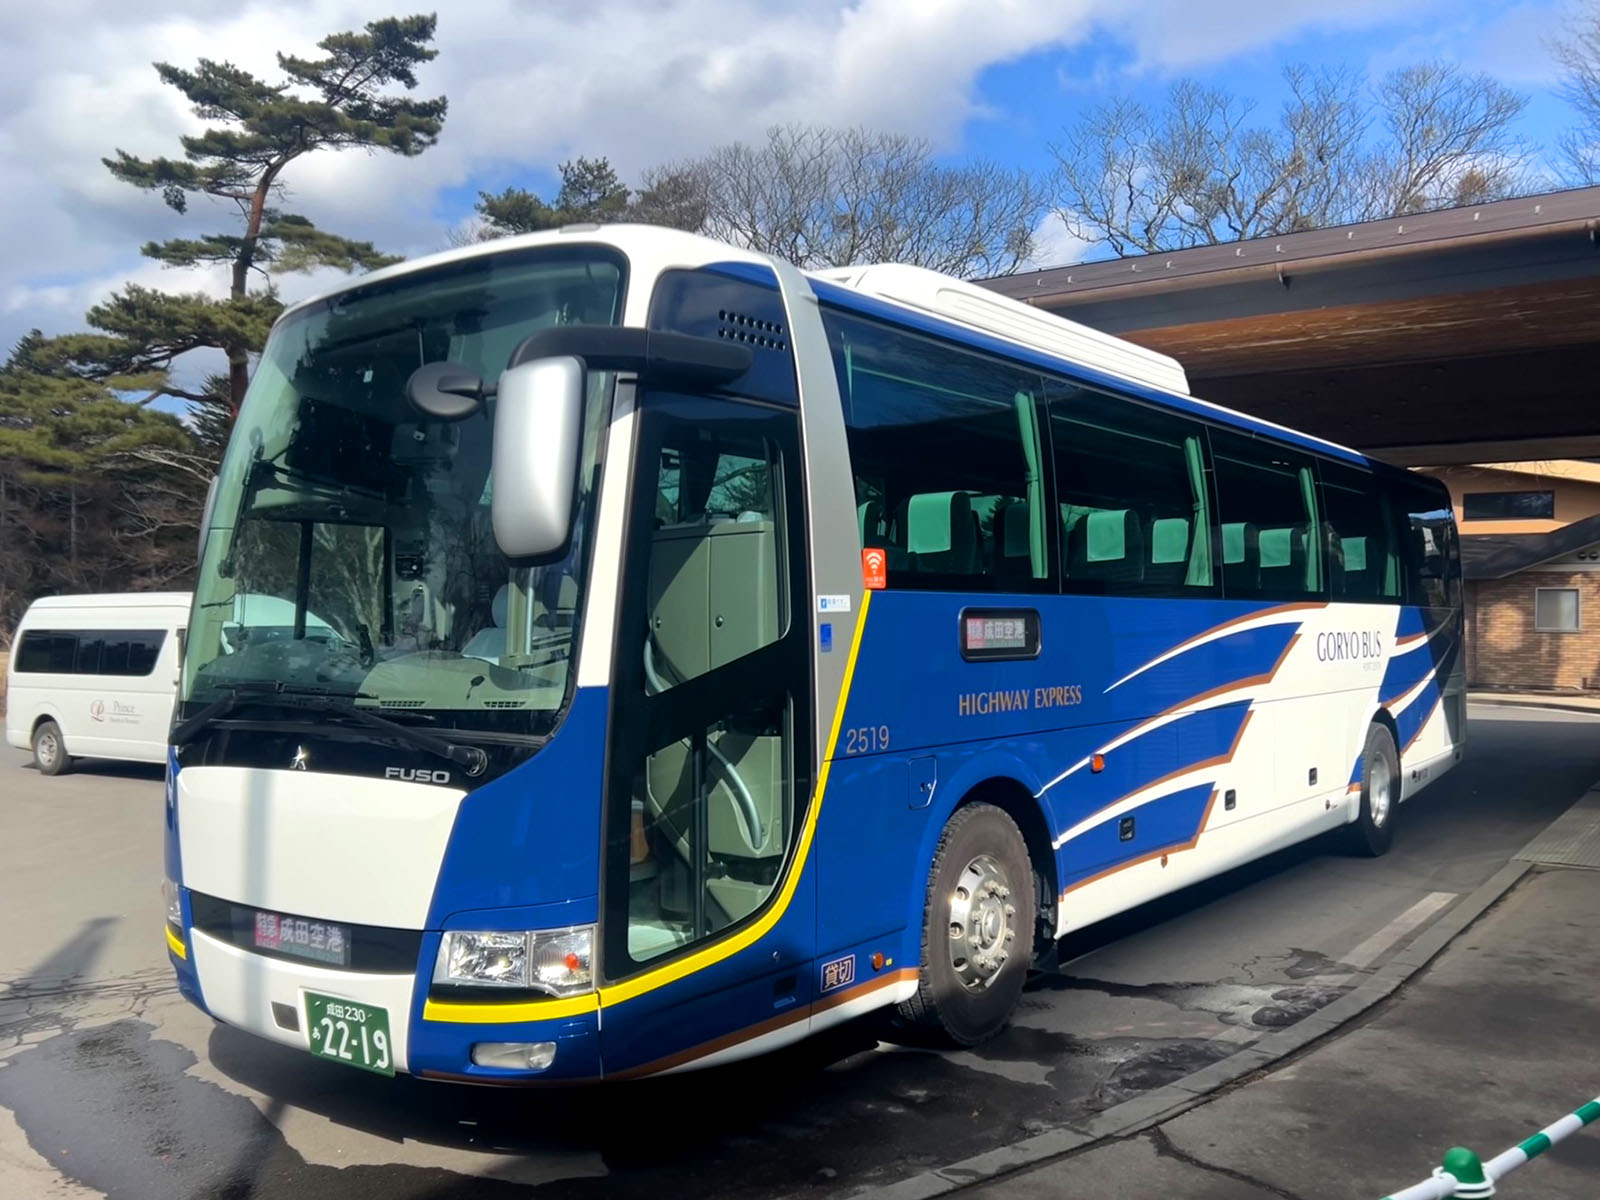 Highway Bus - from Narita Airport to Karuizawa